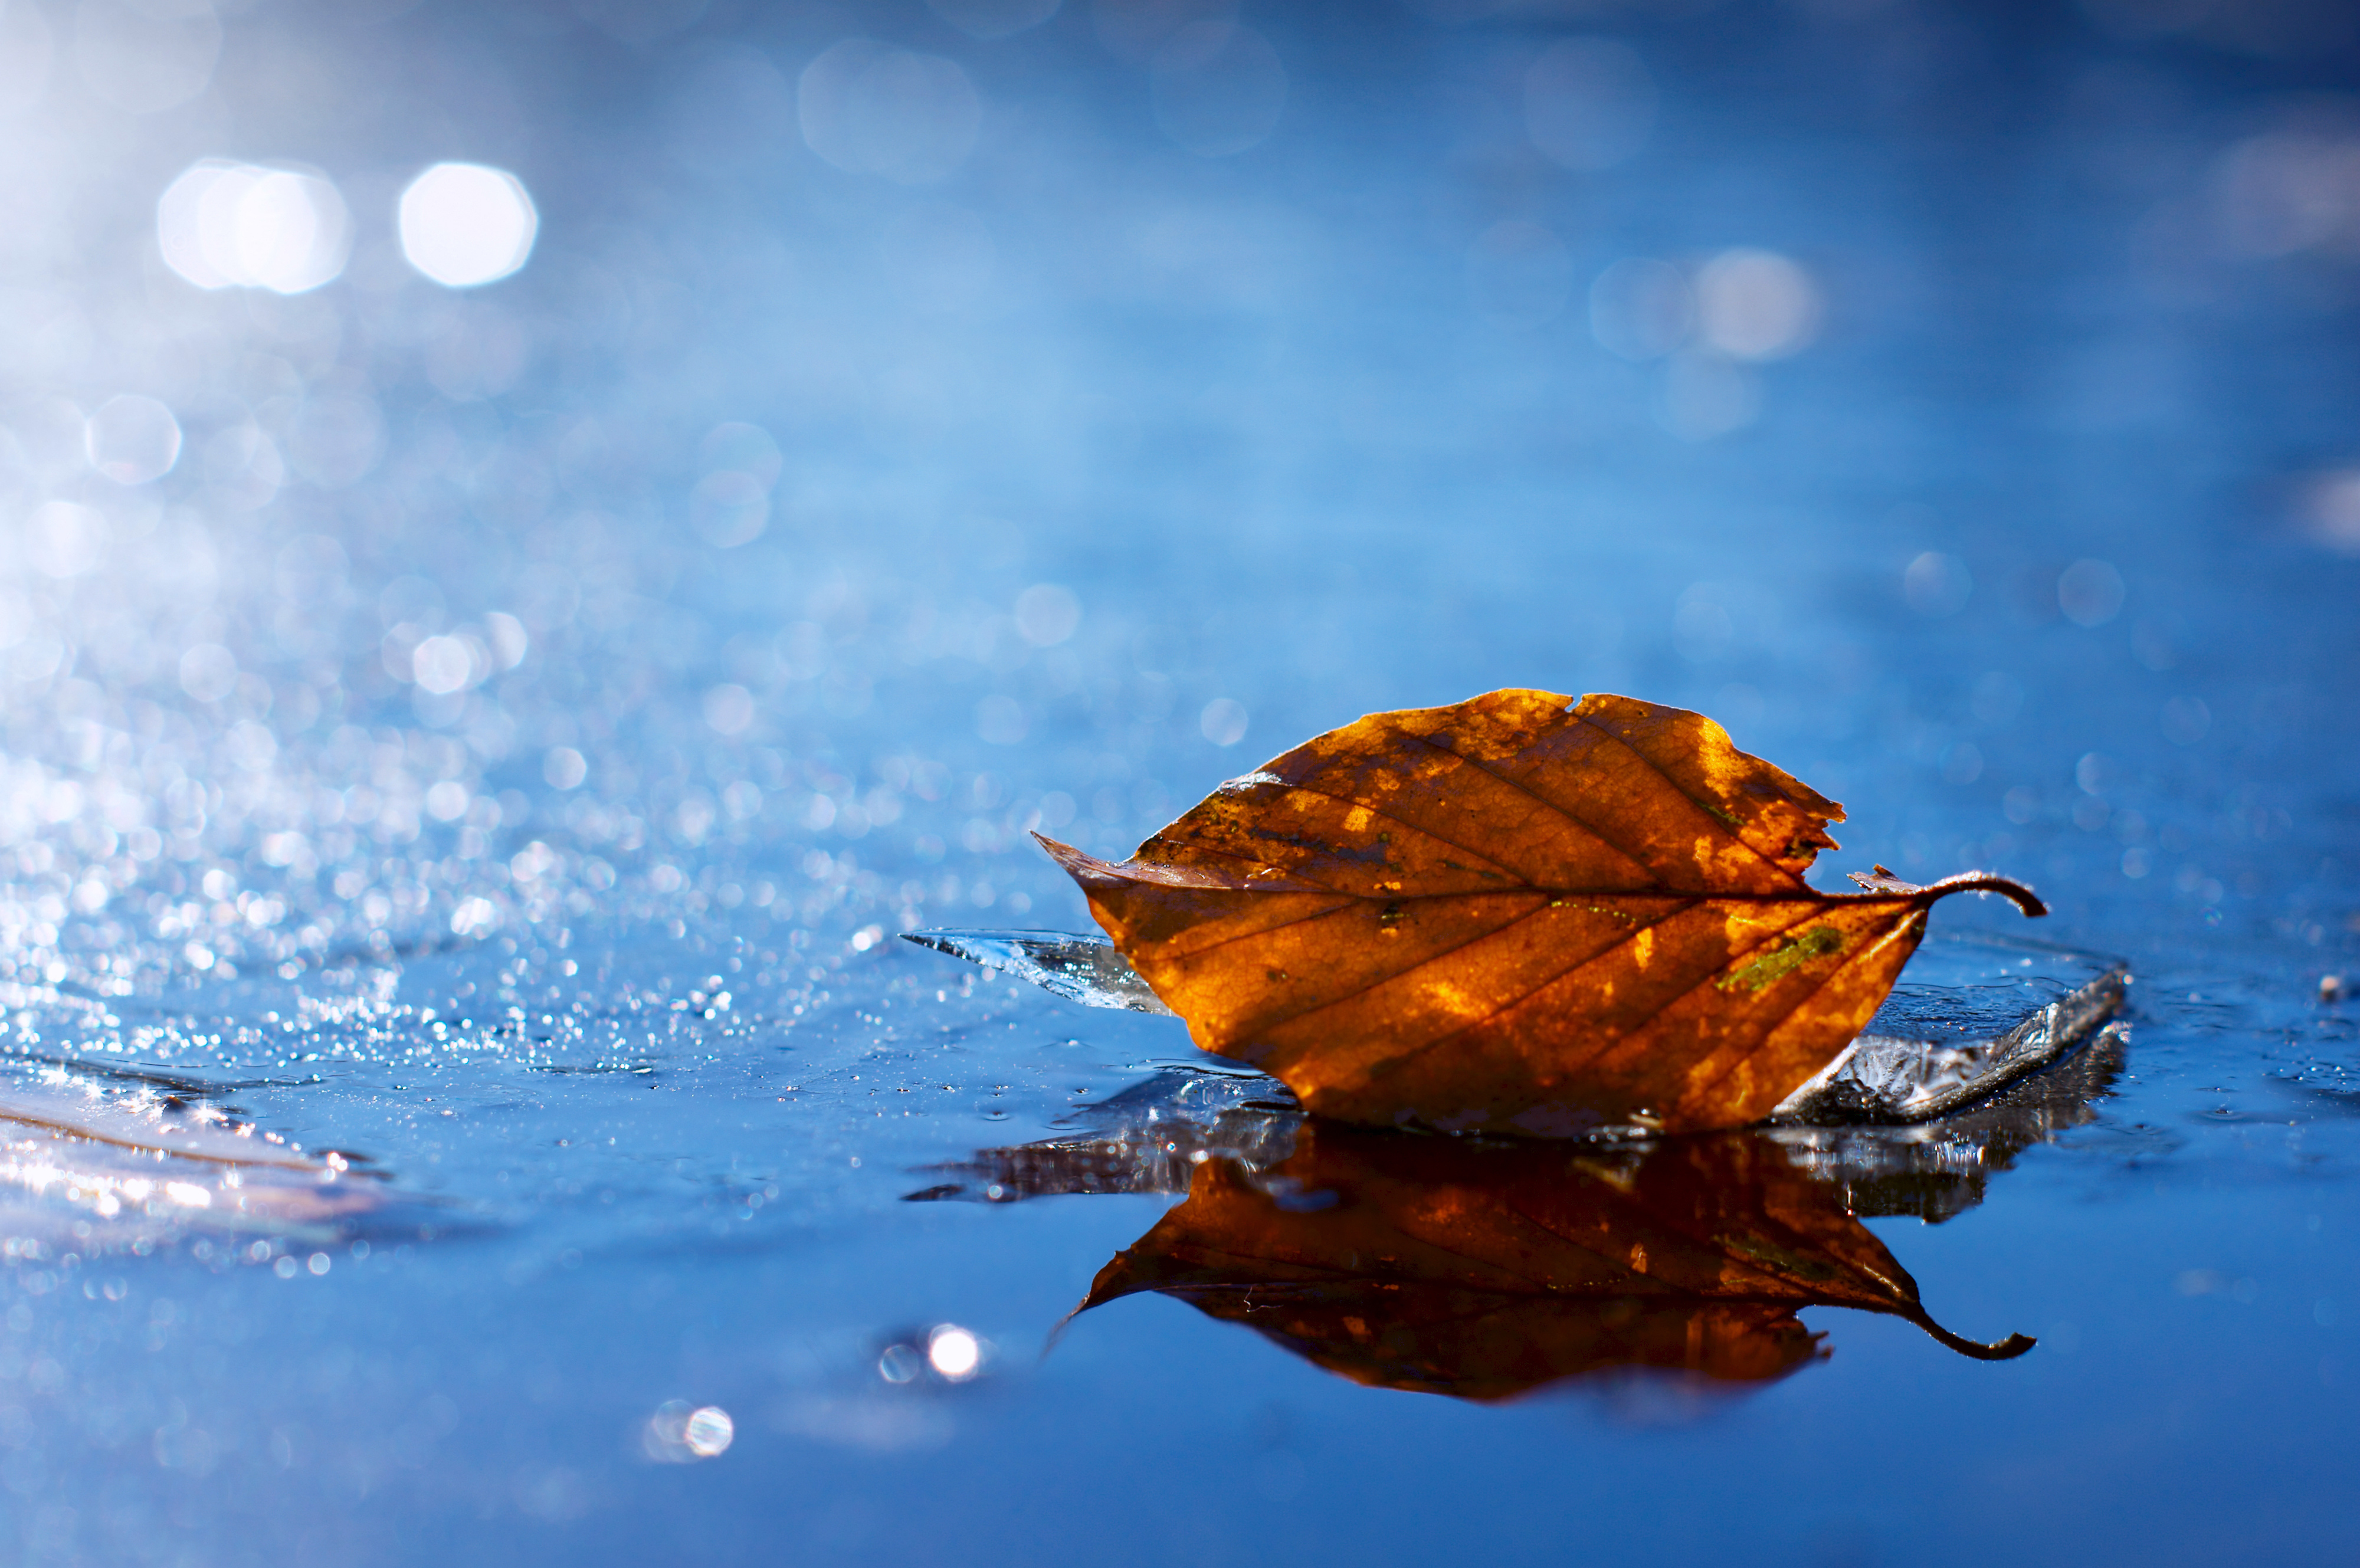 Image: Leaf, water, reflection, bokeh, fallen, lies